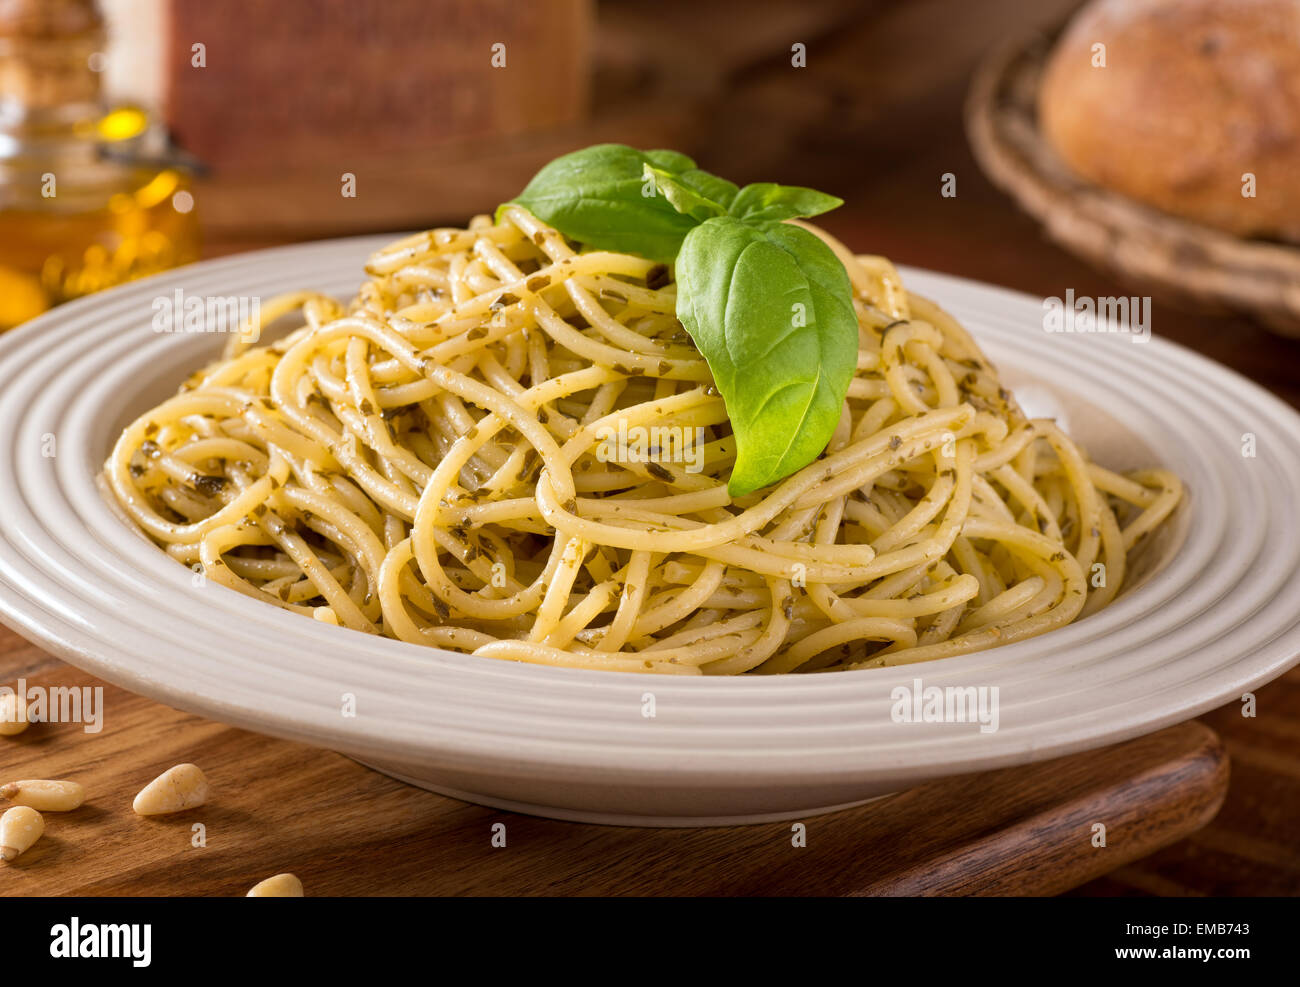 A delicious bowl of fresh spaghetti with green basil pesto sauce. Stock Photo